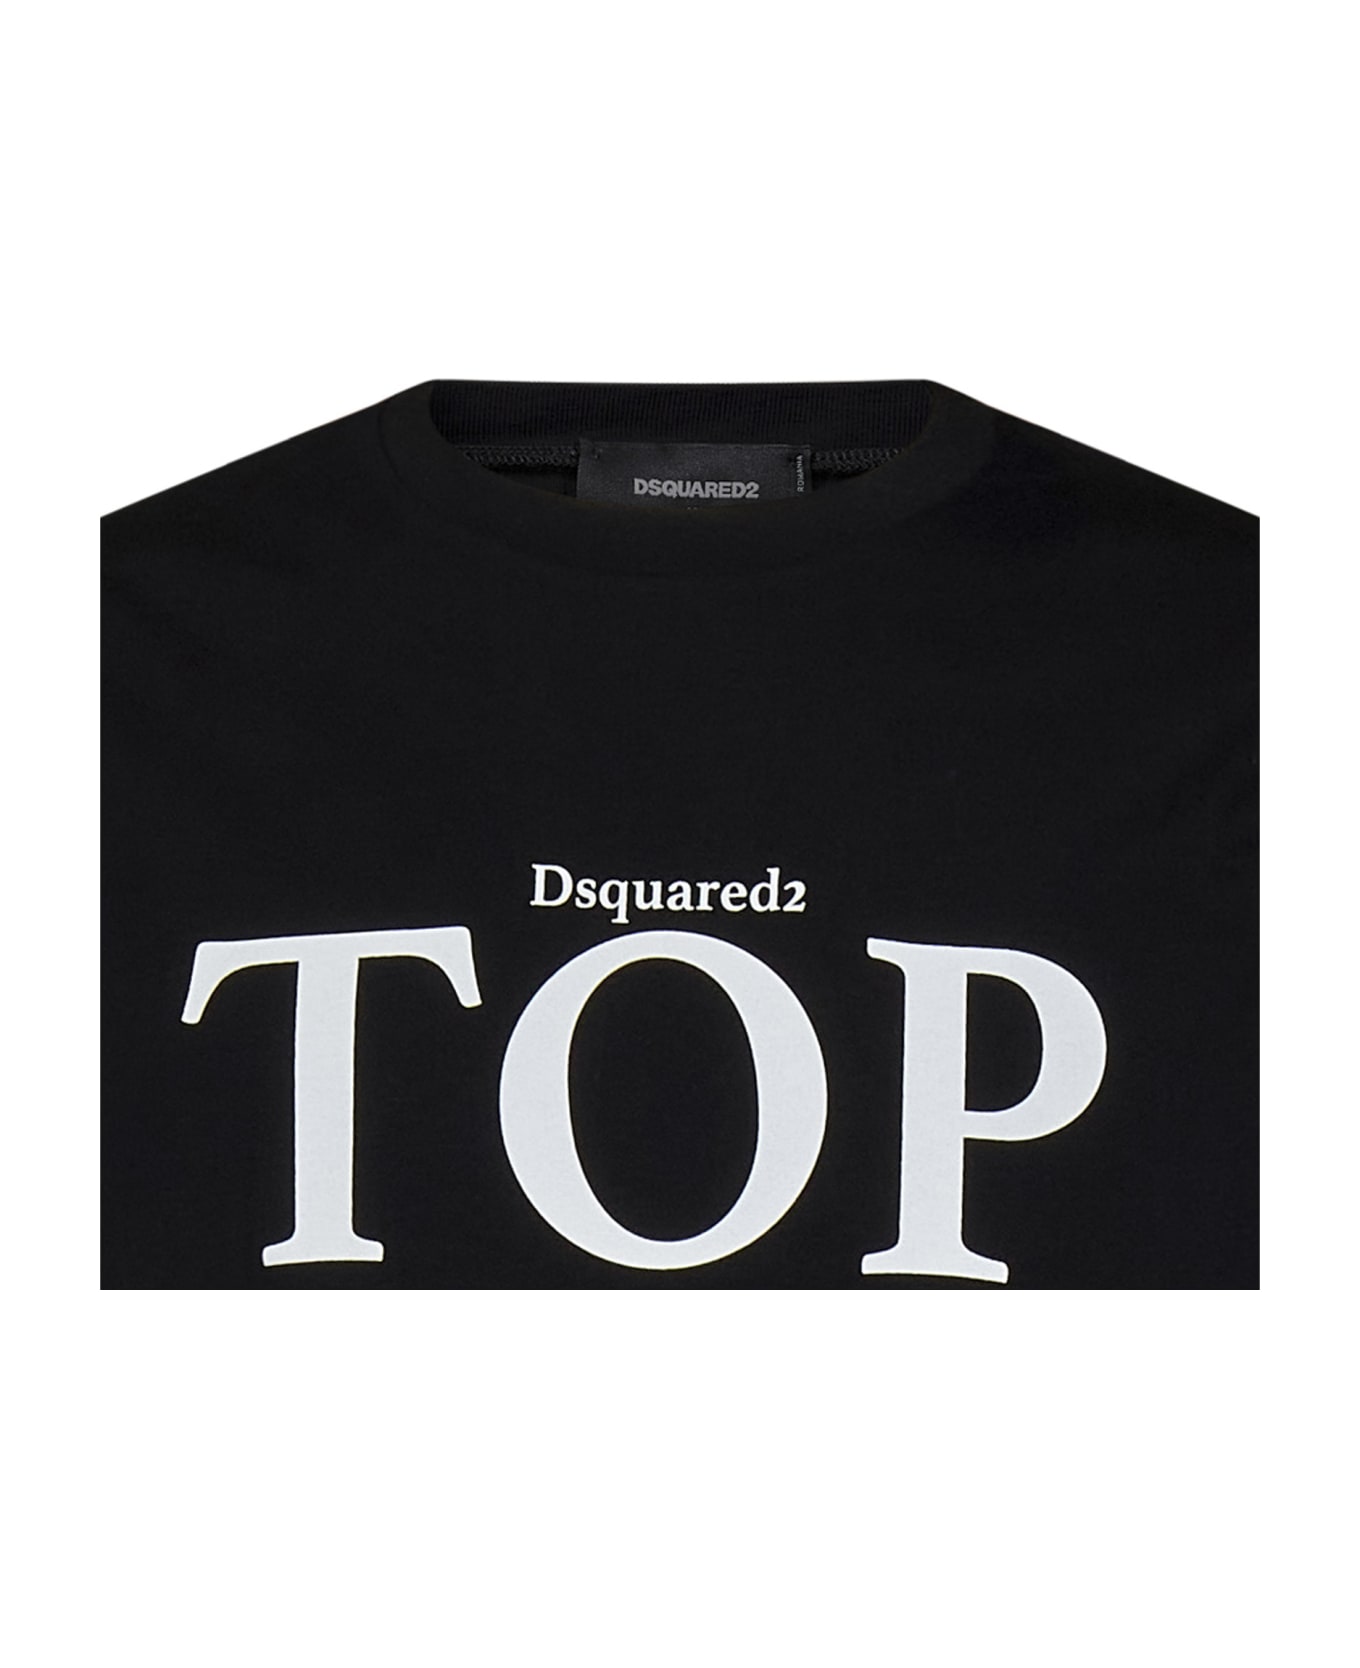 Dsquared2 Top Cool Fit T-shirt - Black